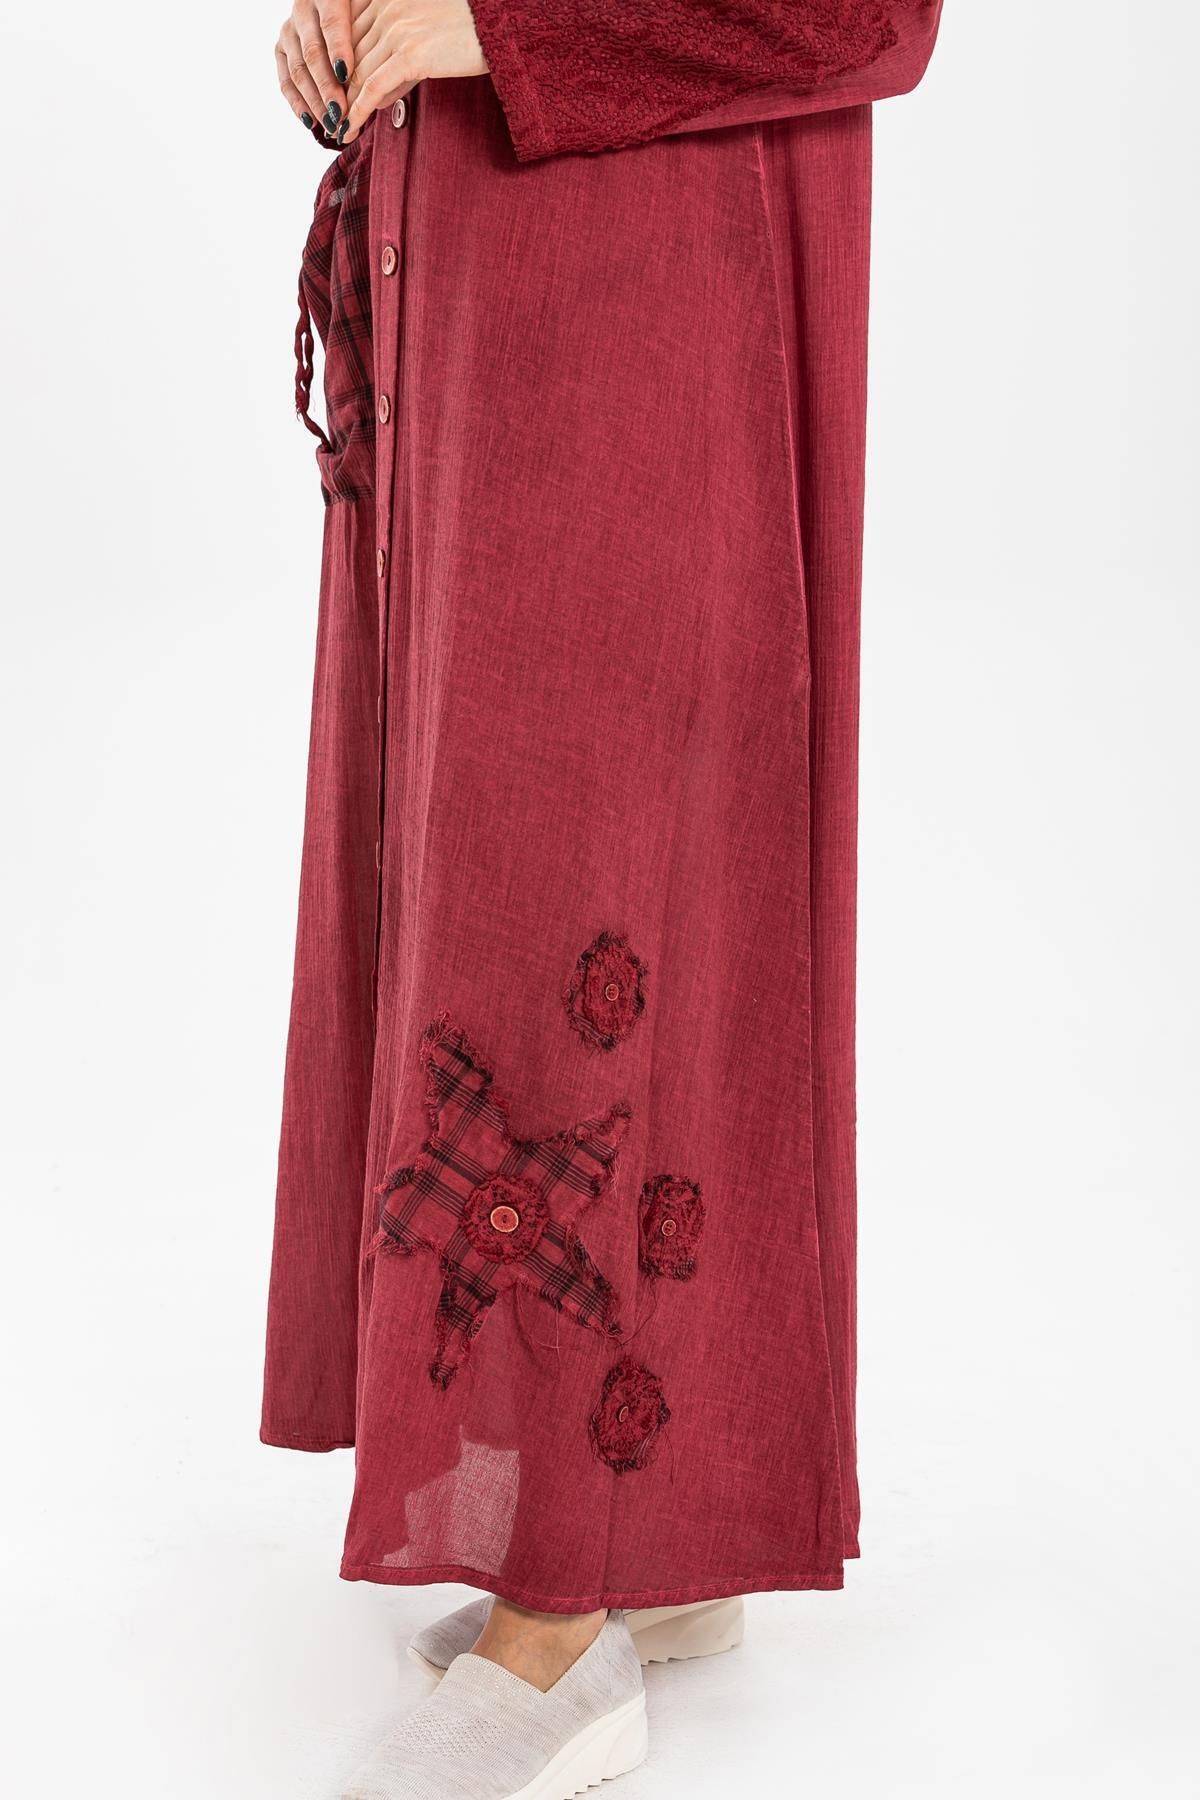 Eliş Şile Bezi لباس آستین بلند شیله پارچه زمردی سایز پلاس دکمه دار Claret Red Brd